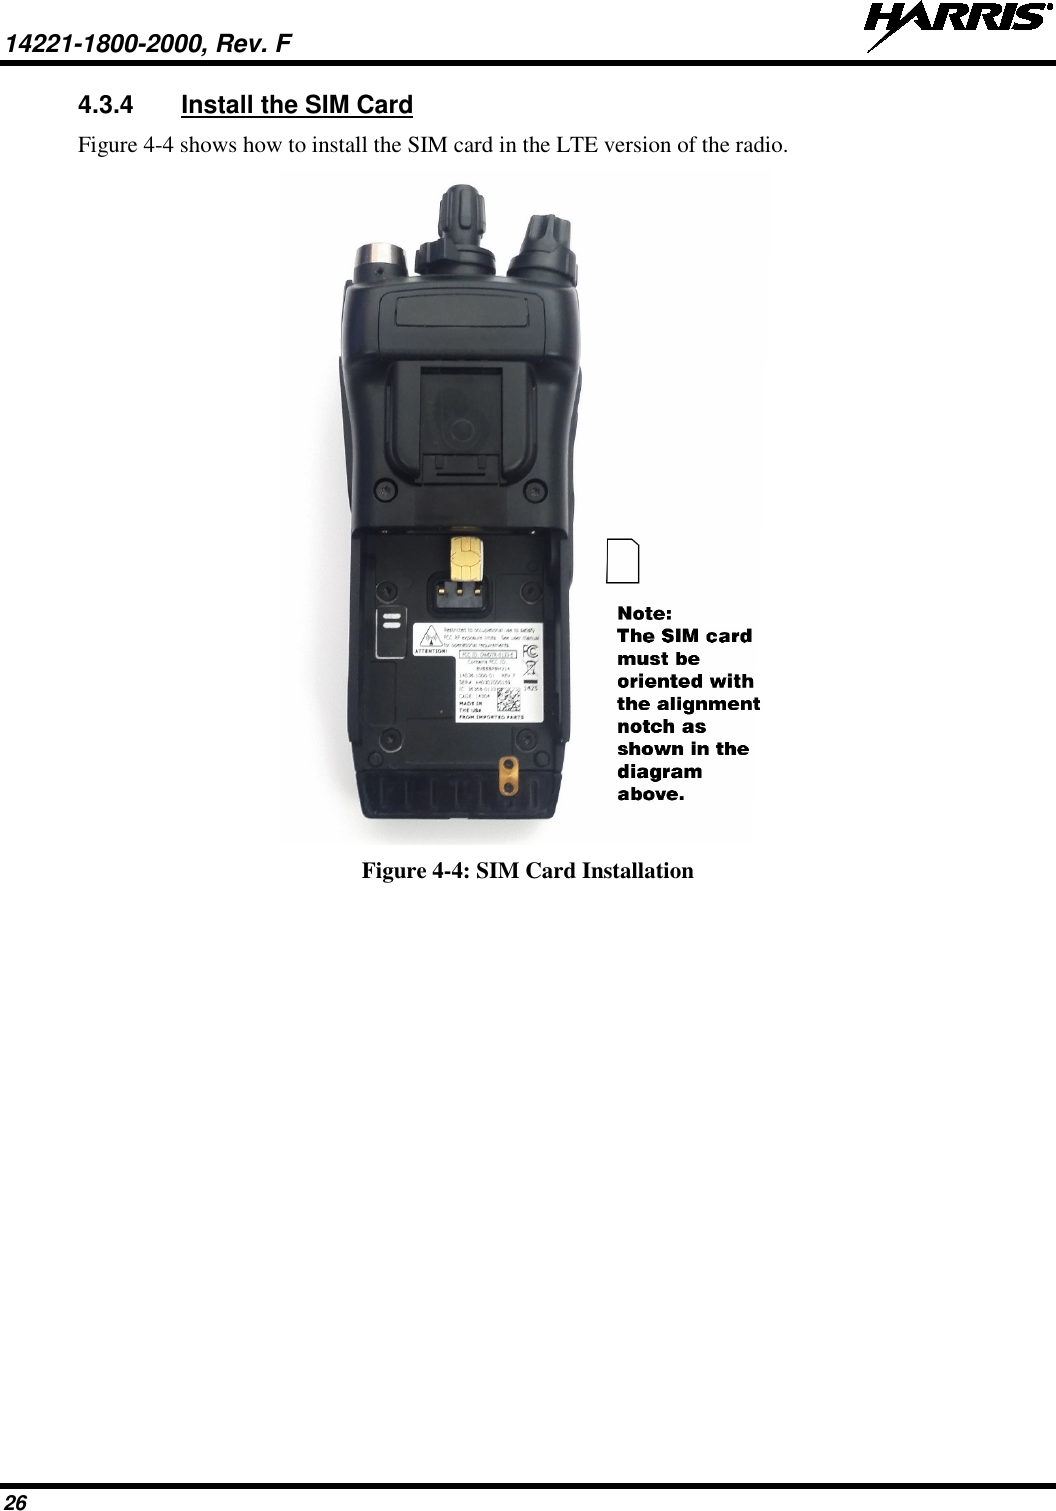 14221-1800-2000, Rev. F   26 4.3.4 Install the SIM Card Figure 4-4 shows how to install the SIM card in the LTE version of the radio.  Figure 4-4: SIM Card Installation 